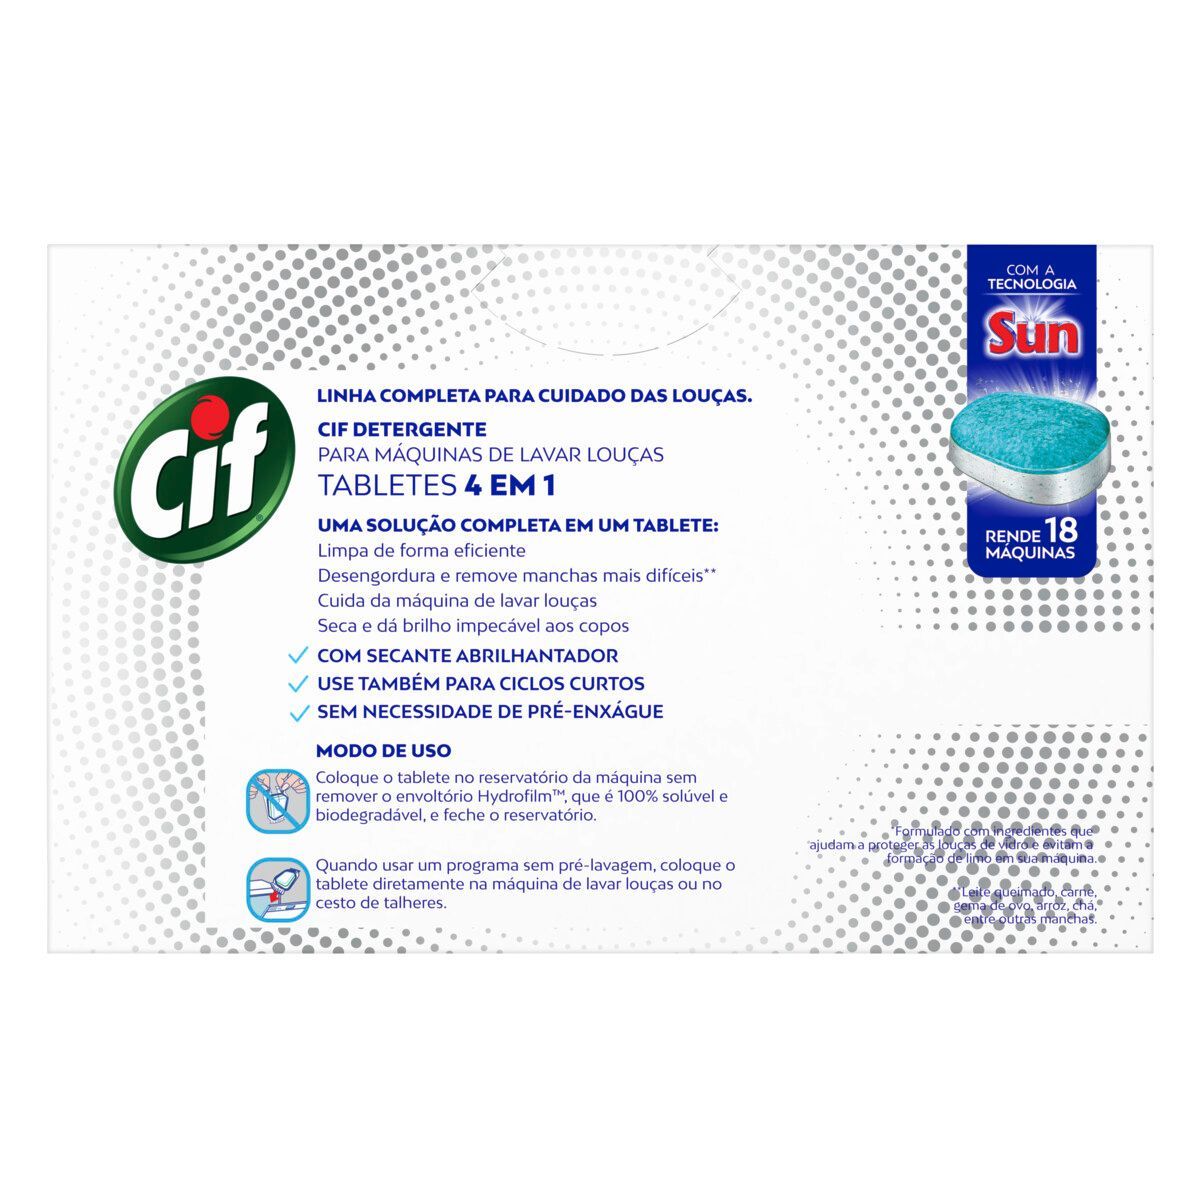 Detergente Tabletes 4 em 1 Cif para Máquina de Lavar Louças 315g image number 1